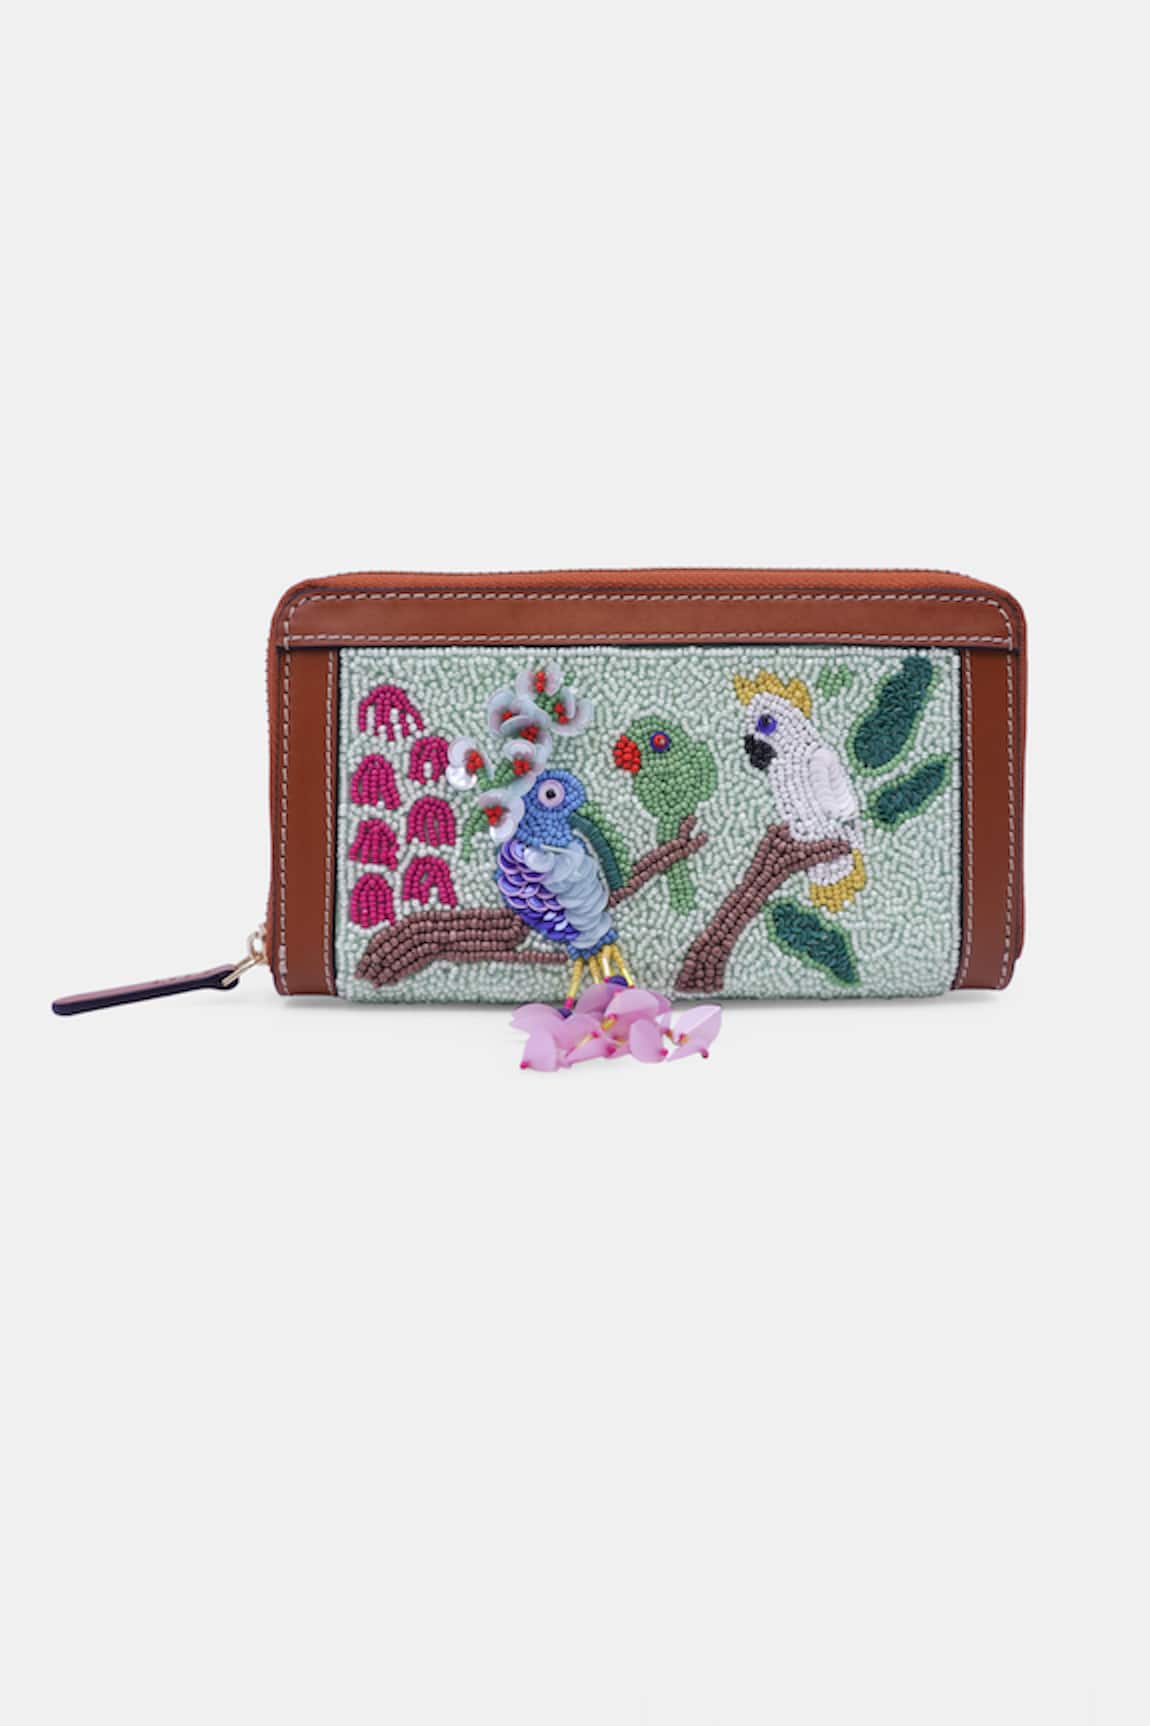 VERSUHZ Enchanted Garden Embellished Clutch Wallet